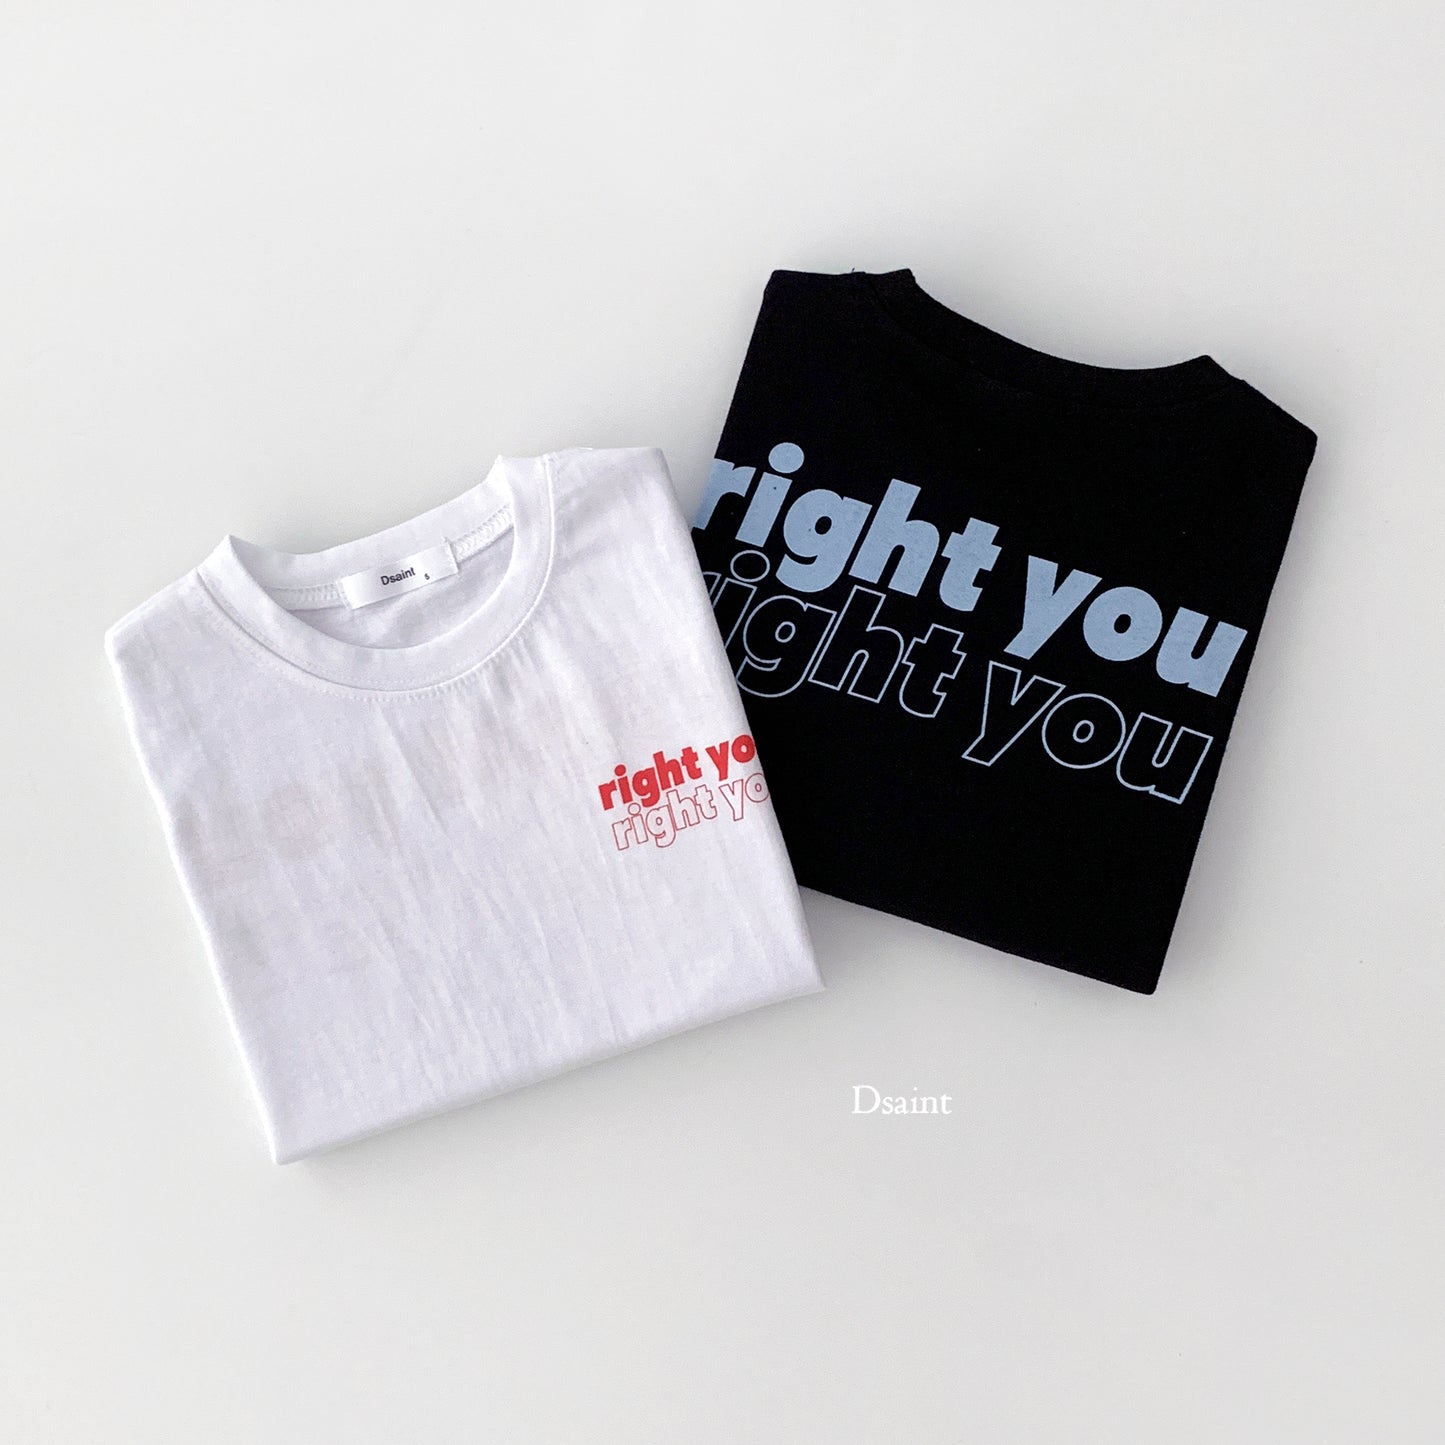 [D Saint] Right You T-Shirts